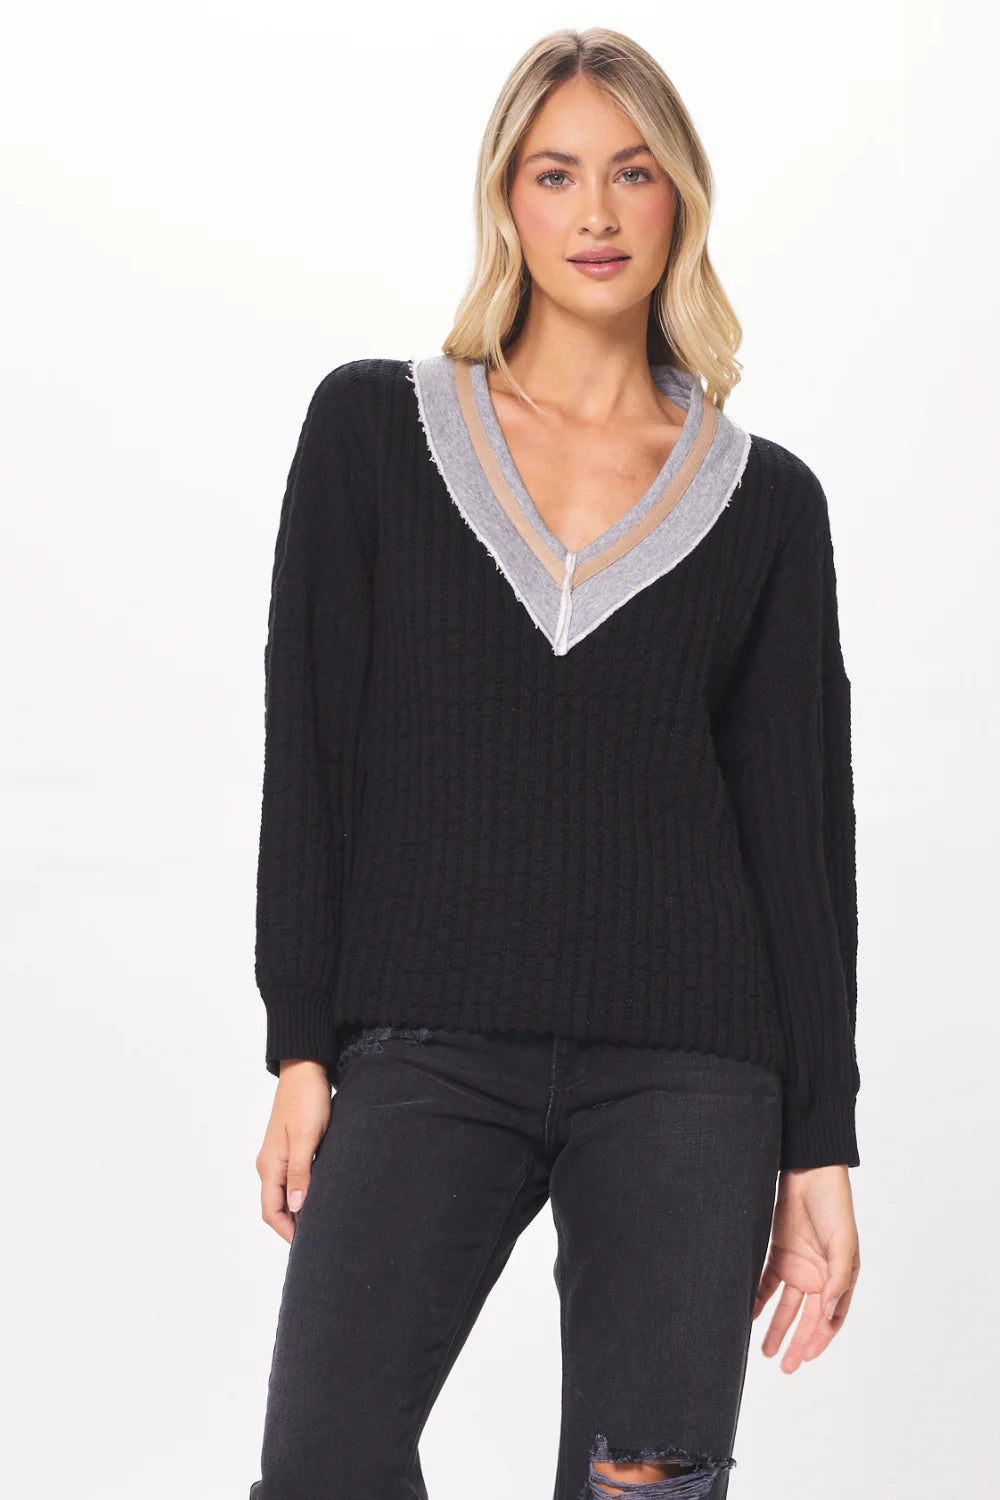 Black & Grey Sweater